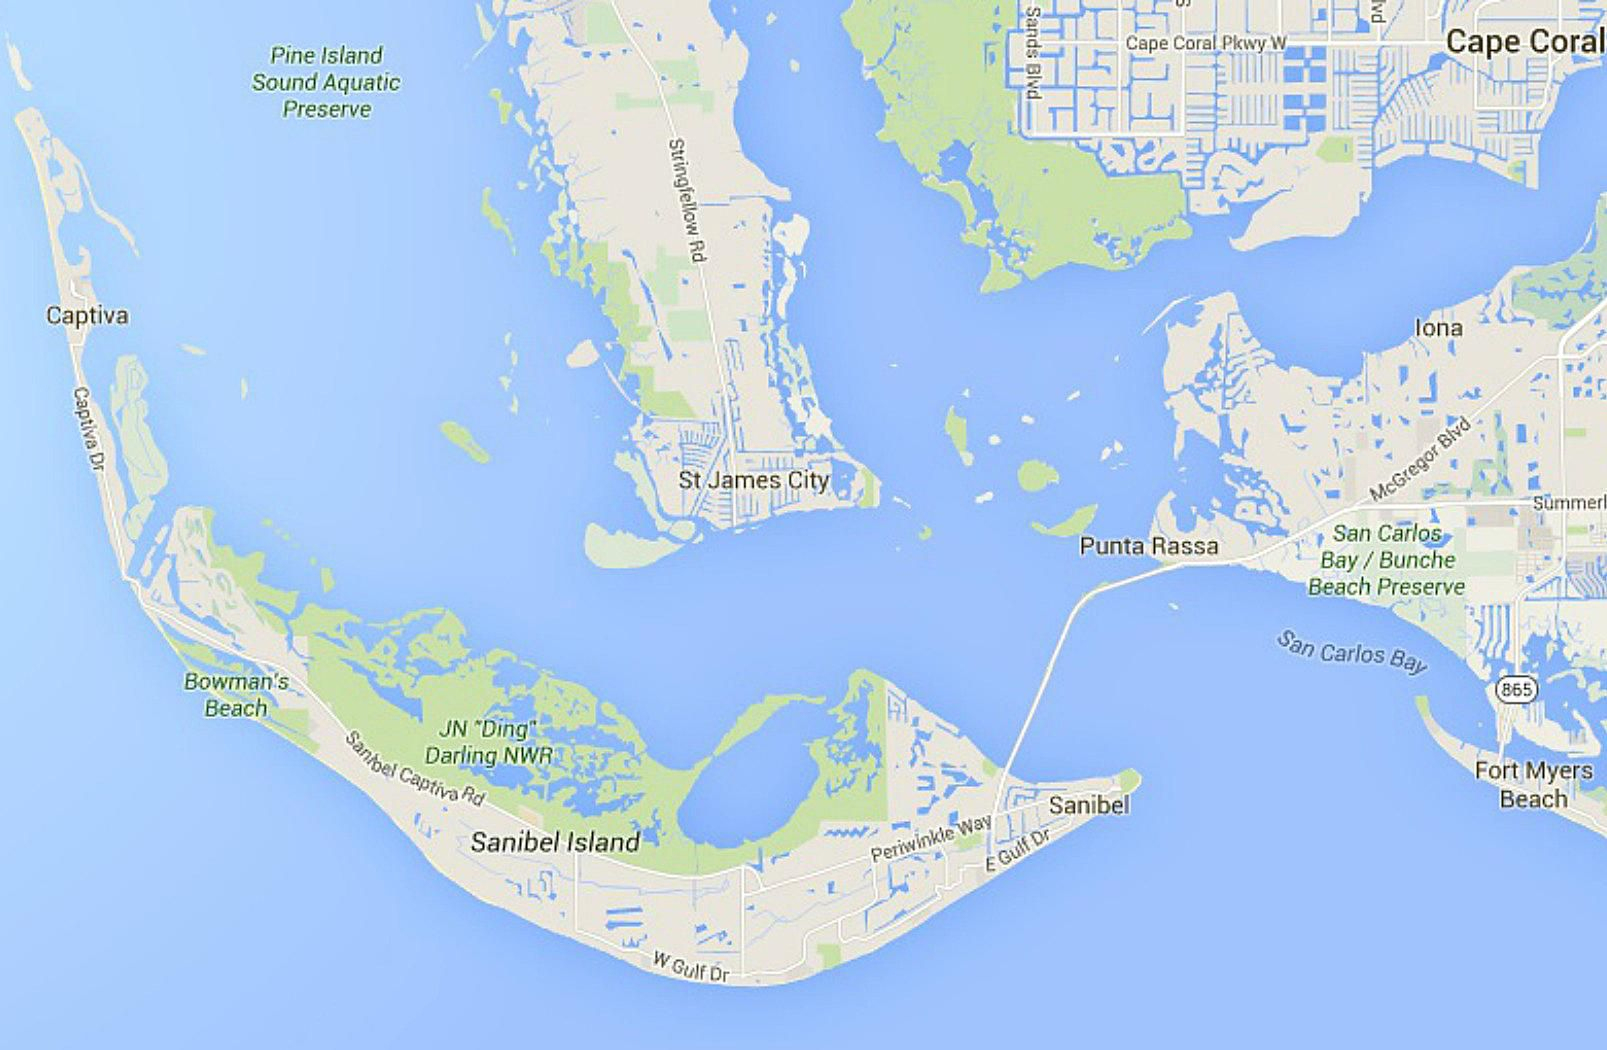 Maps Of Florida: Orlando, Tampa, Miami, Keys, And More - Google Maps Vero Beach Florida